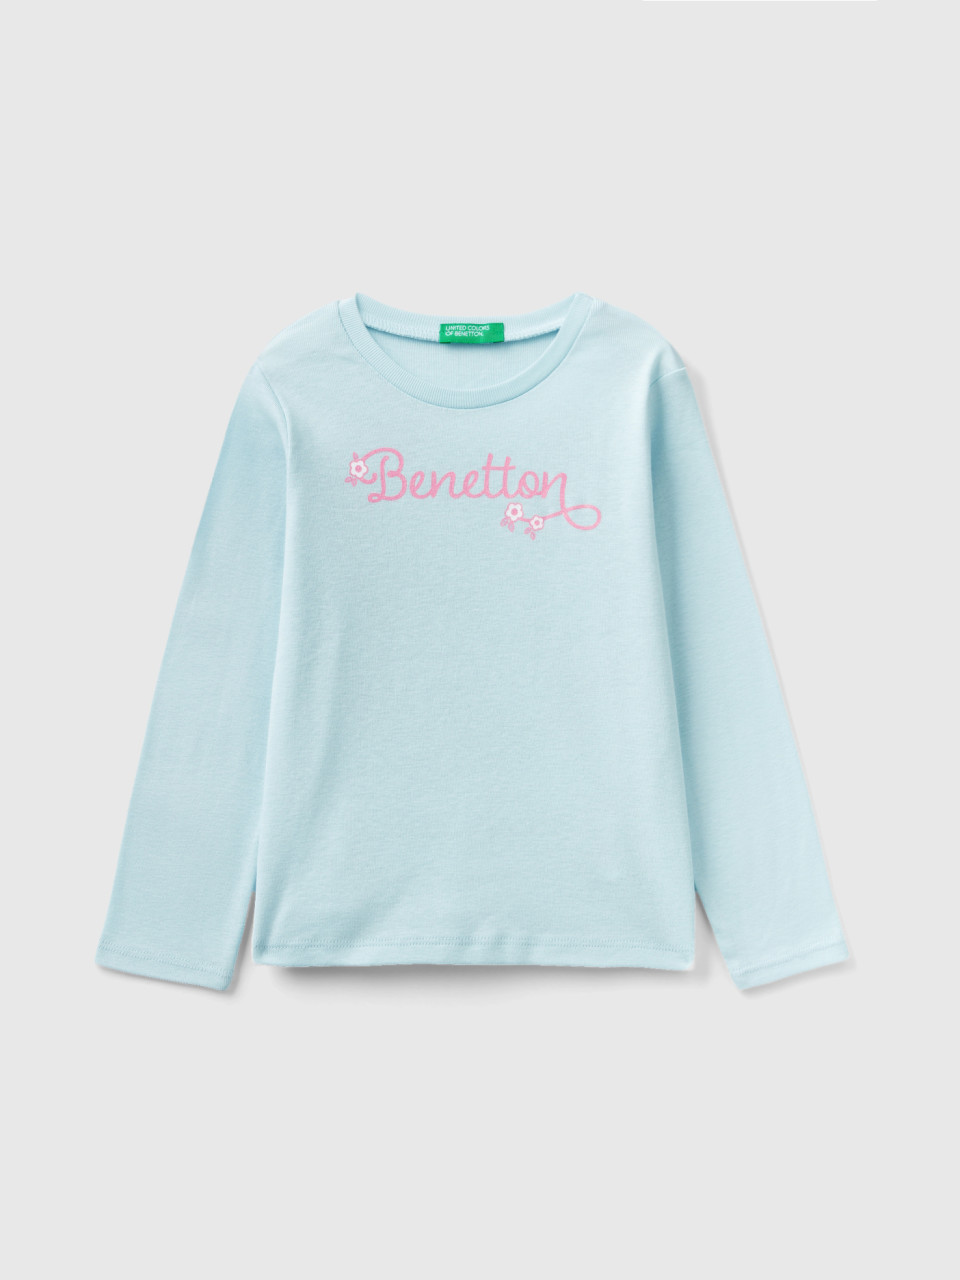 Benetton, Camiseta De Manga Larga Con Estampado De Glitter, Verde Agua, Niños